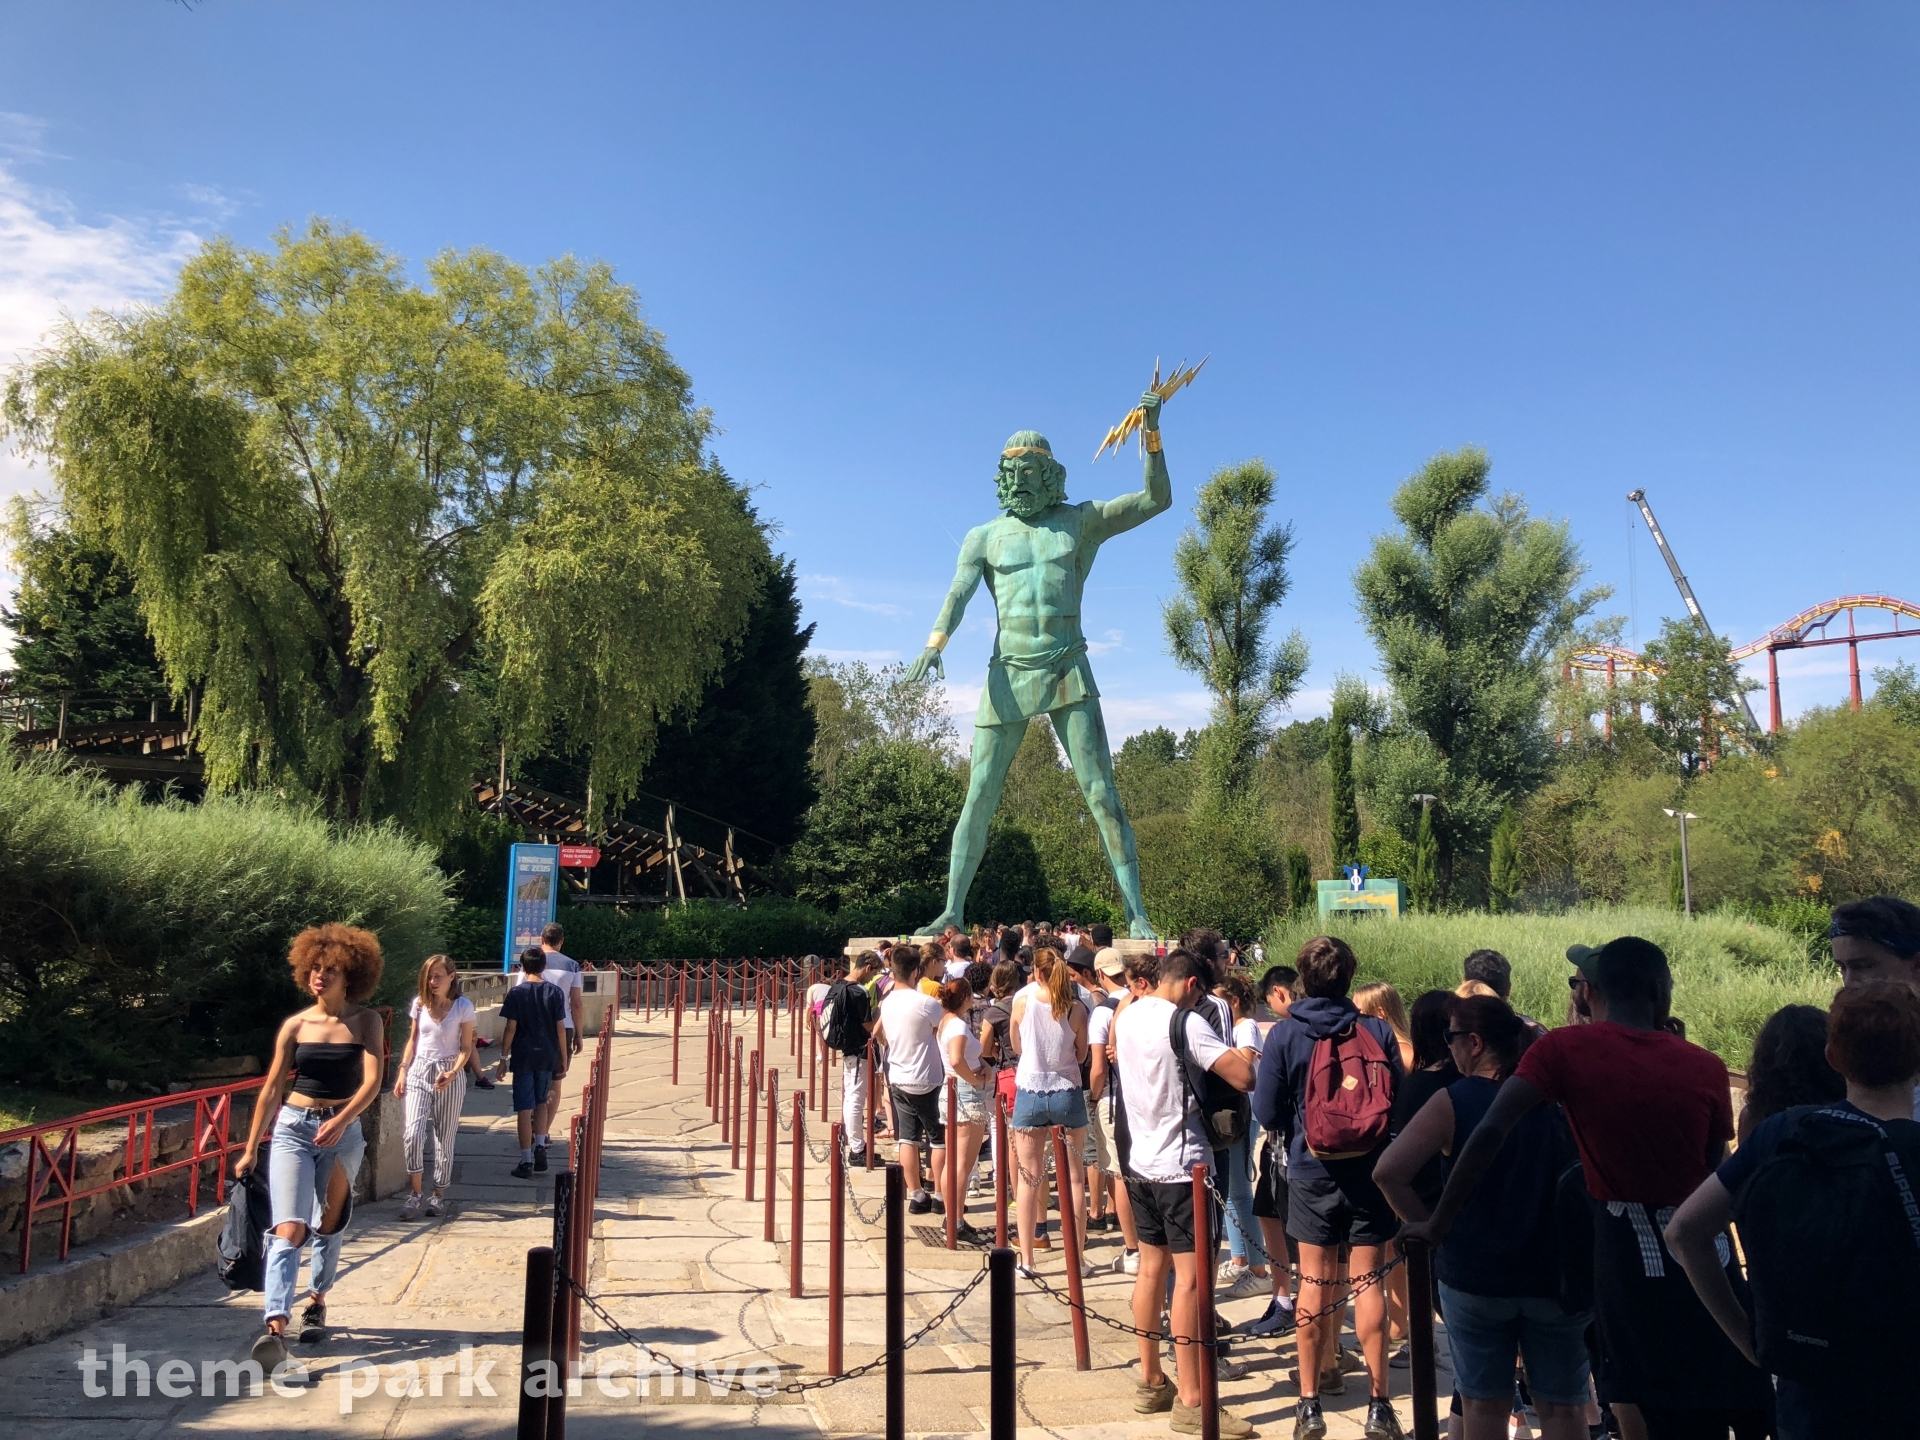 Tonnerre De Zeus at Parc Asterix